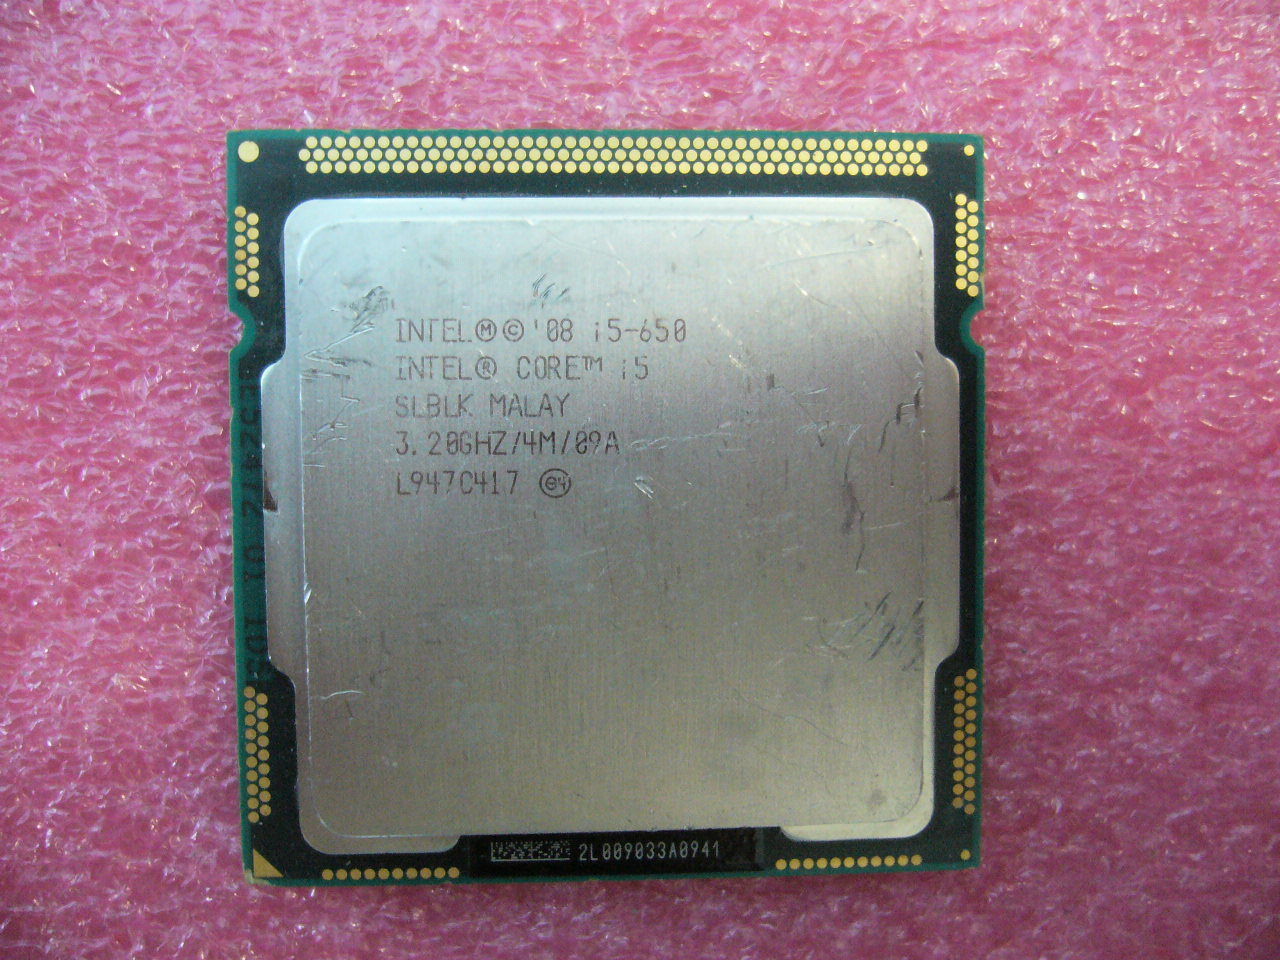 QTY 1x INTEL Core i5 Dual Core CPU i5-650 3.20GHZ/4MB LGA1156 SLBTJ SLBLK - Click Image to Close